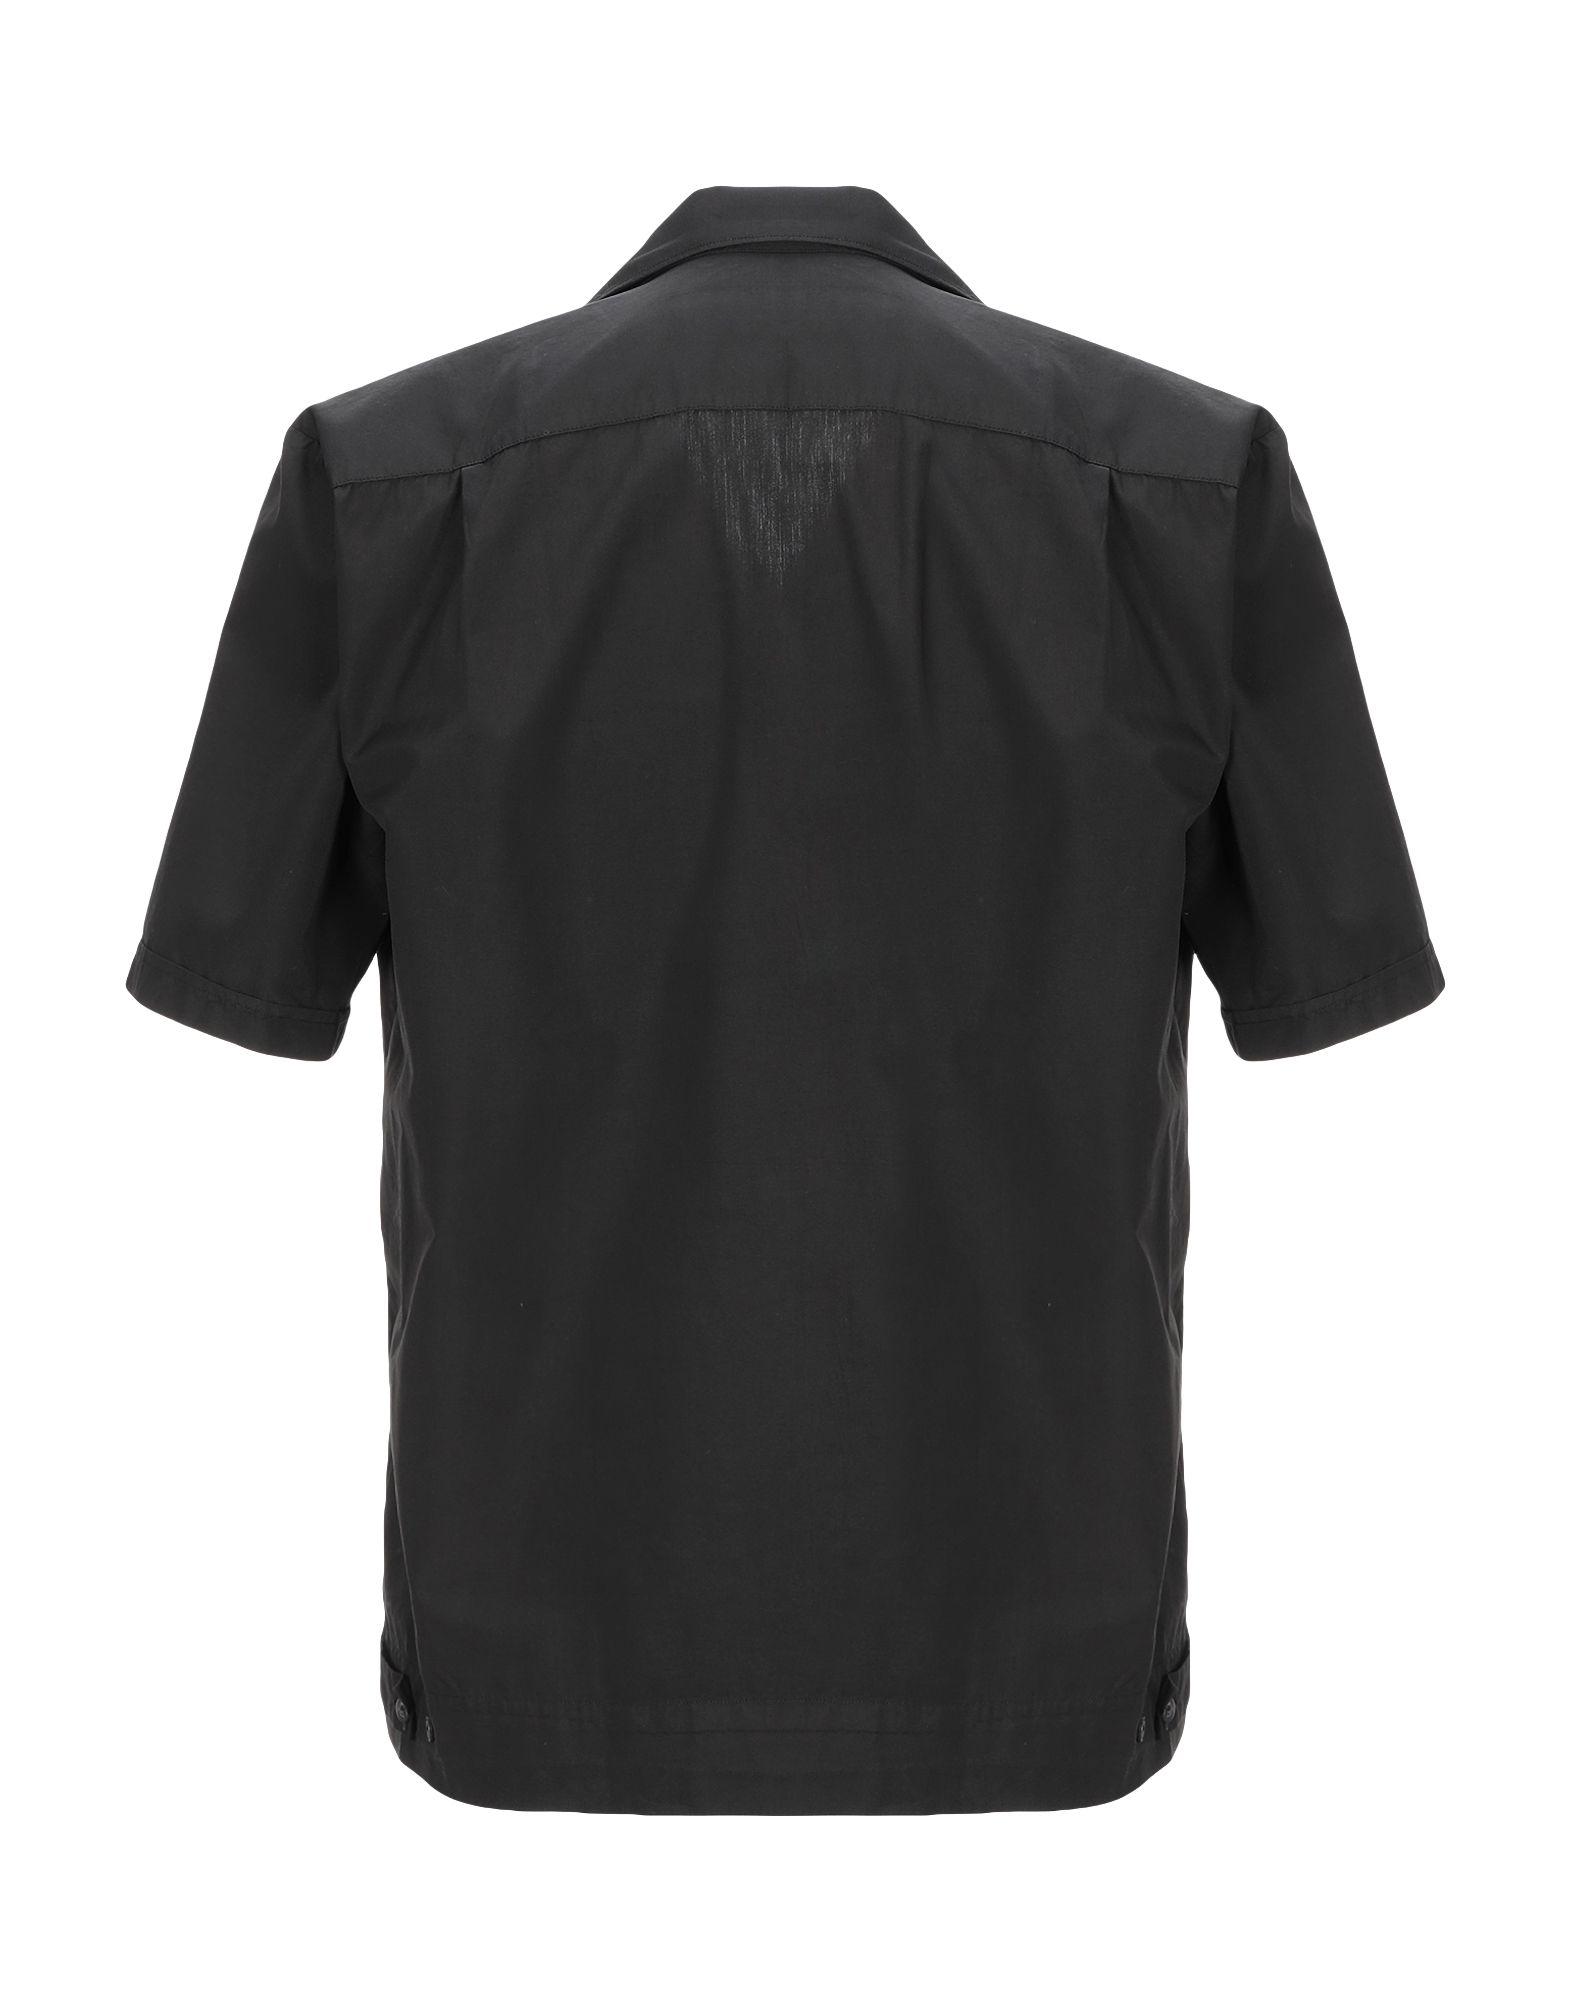 Department 5 Shirt in Black for Men - Lyst